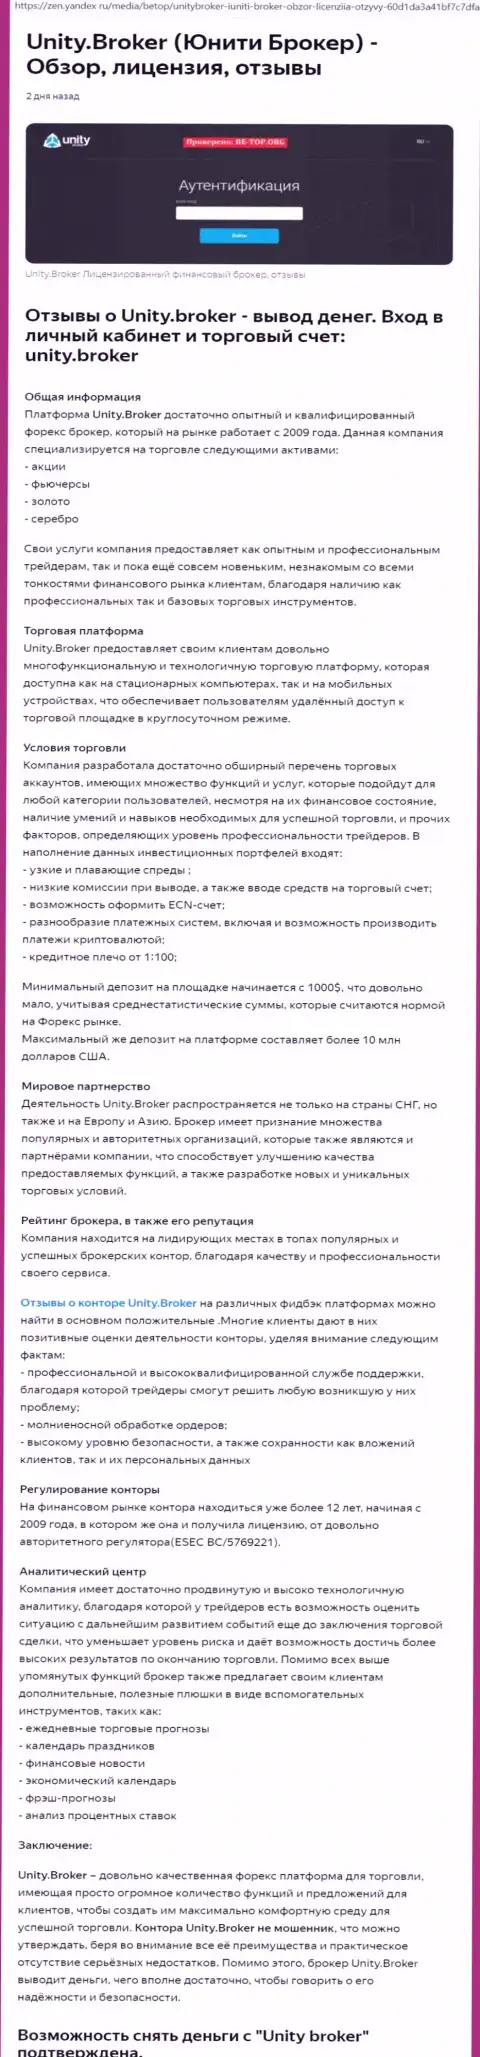 Обзор деятельности форекс организации UnityBroker на онлайн-сервисе Яндекс Дзен